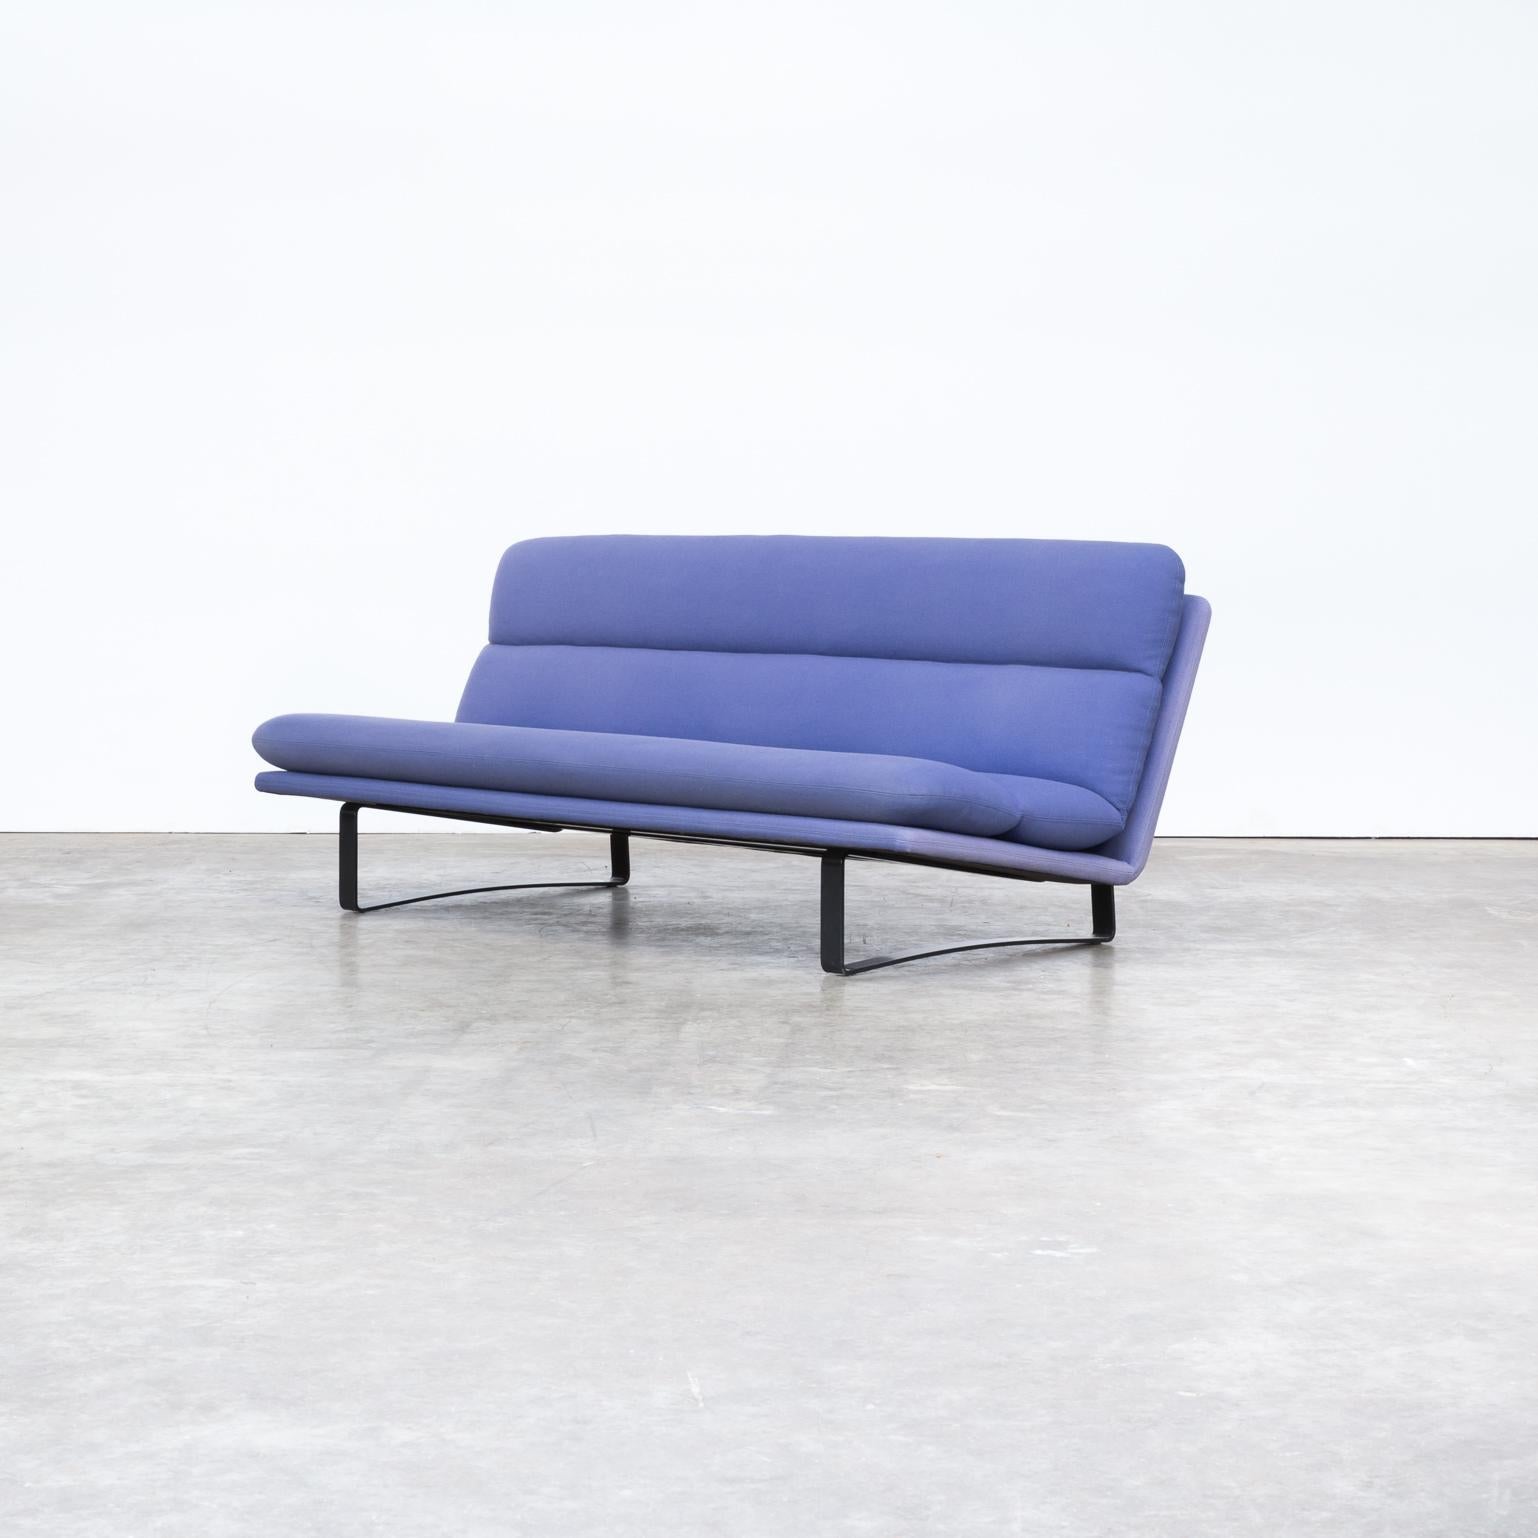 Dutch Kho Liang Ie C684 wood and blue velvet sofa for Artifort, 60s For Sale